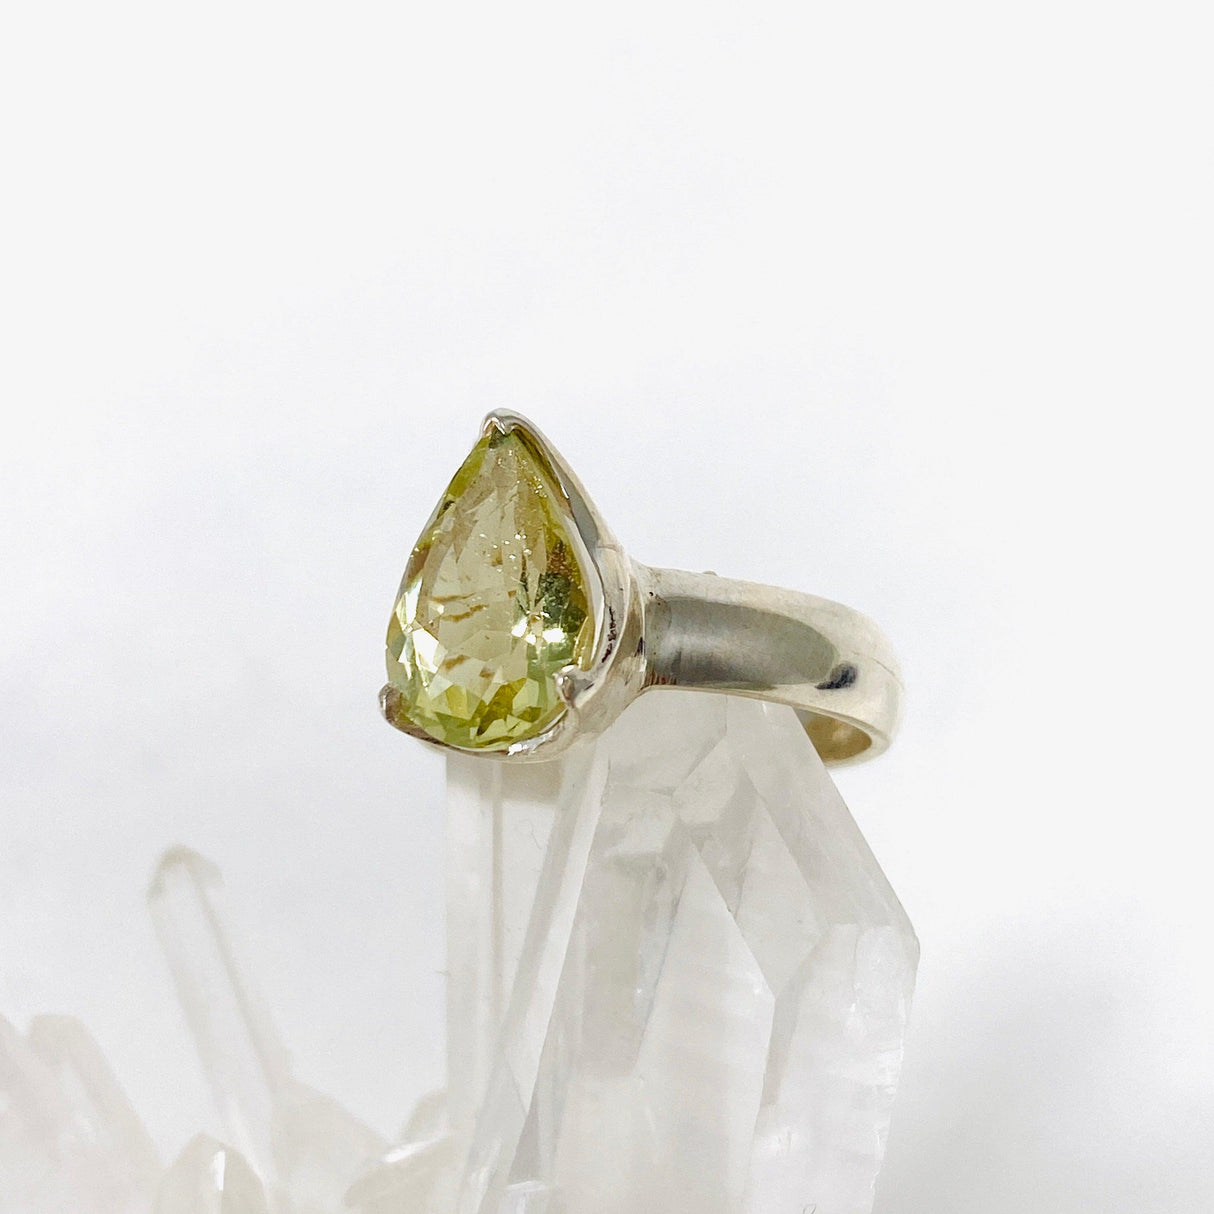 Heliodor Golden Beryl Pear Cut Ring Size 7.5 PRGJ323 - Nature's Magick